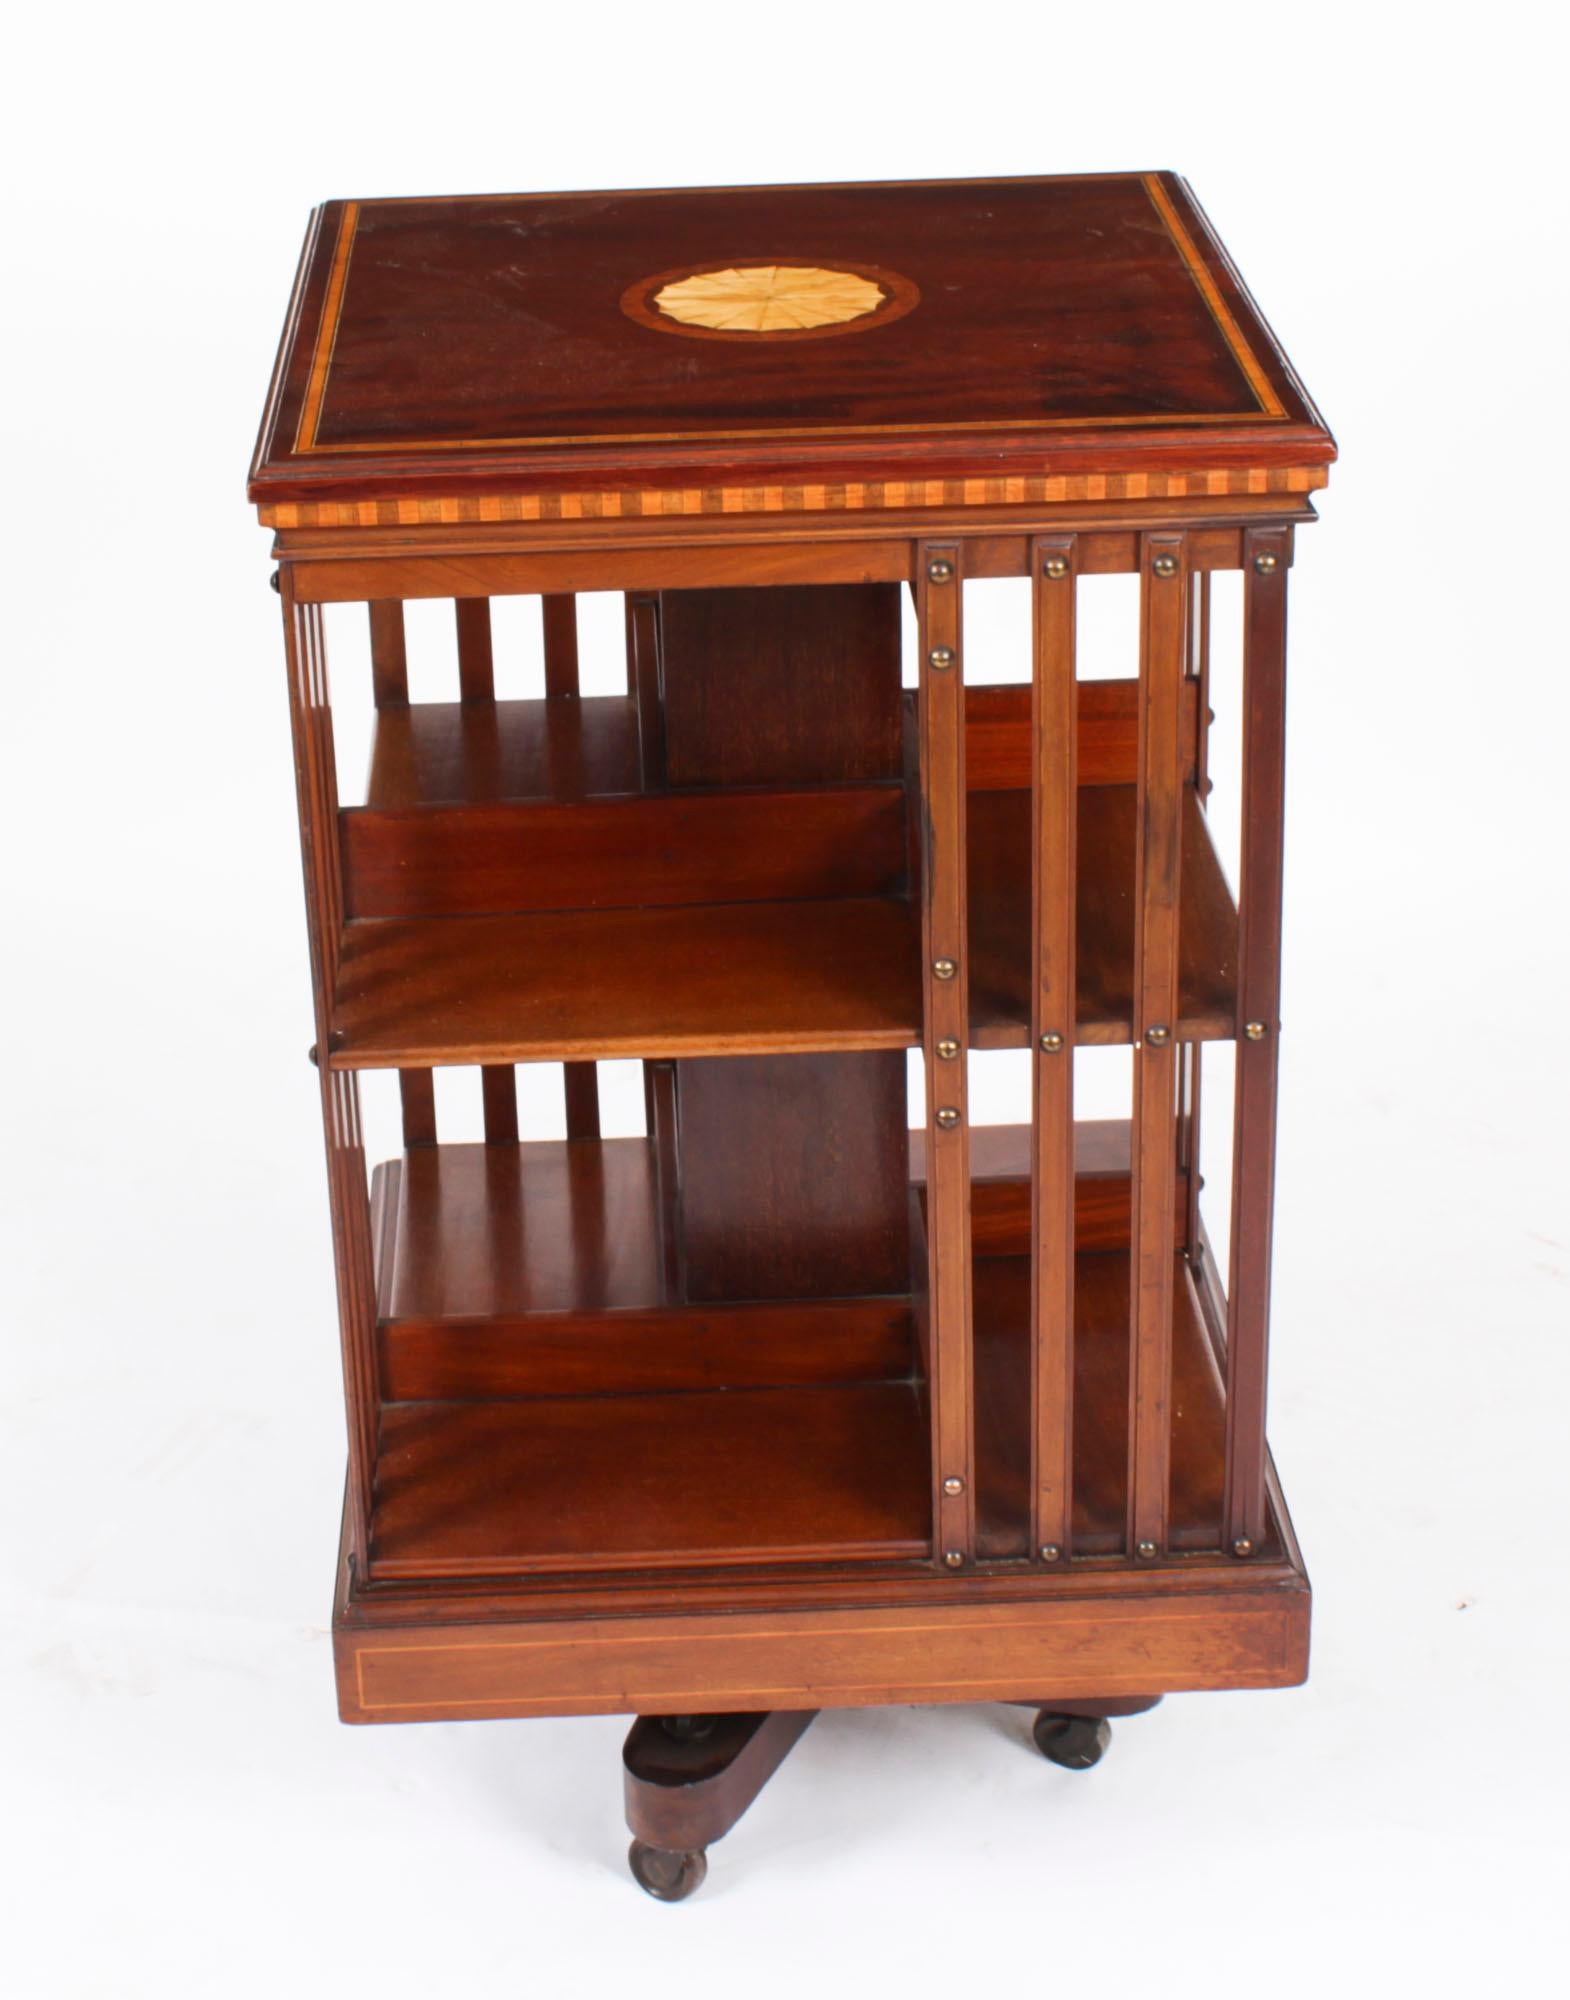 English Antique Edwardian Inlaid Mahogany Revolving Bookcase C1900 For Sale